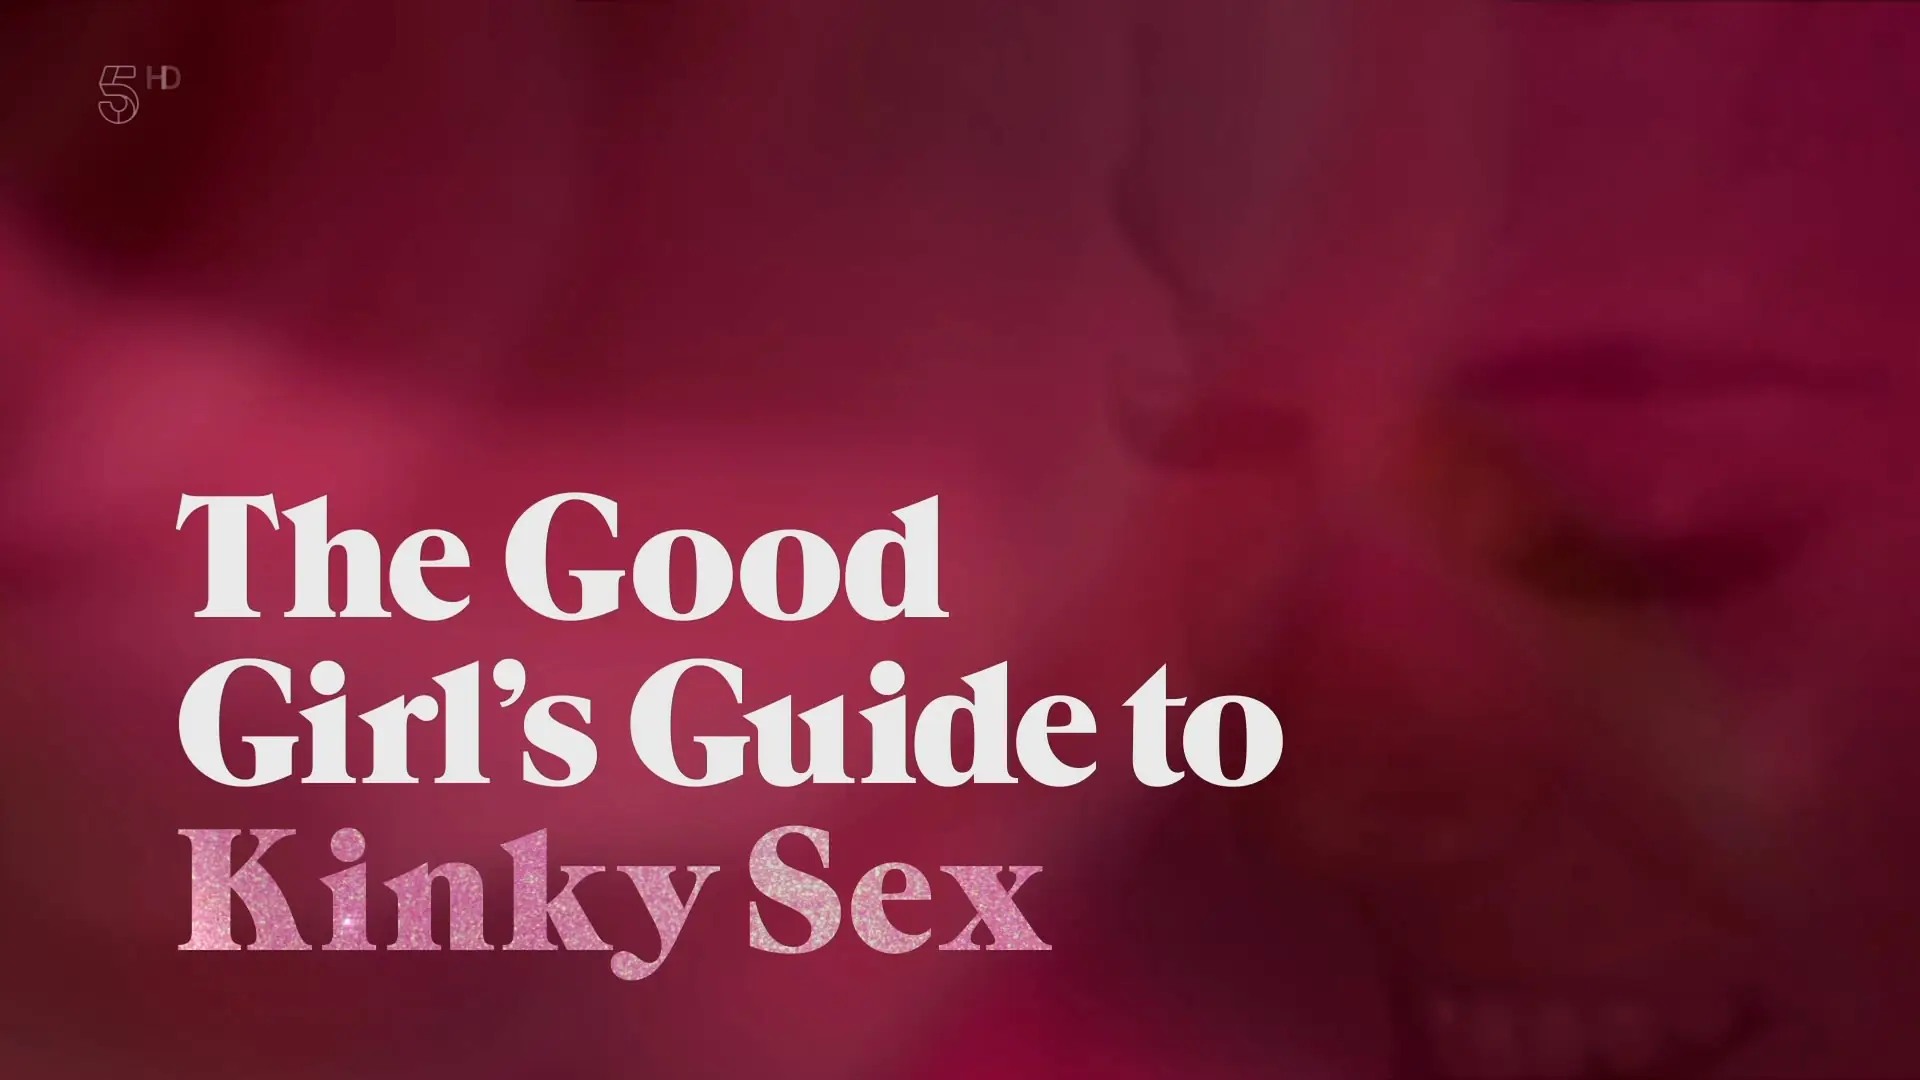 Ch5 Good Girls Guide To Kinky Sex 2019 Avaxhome